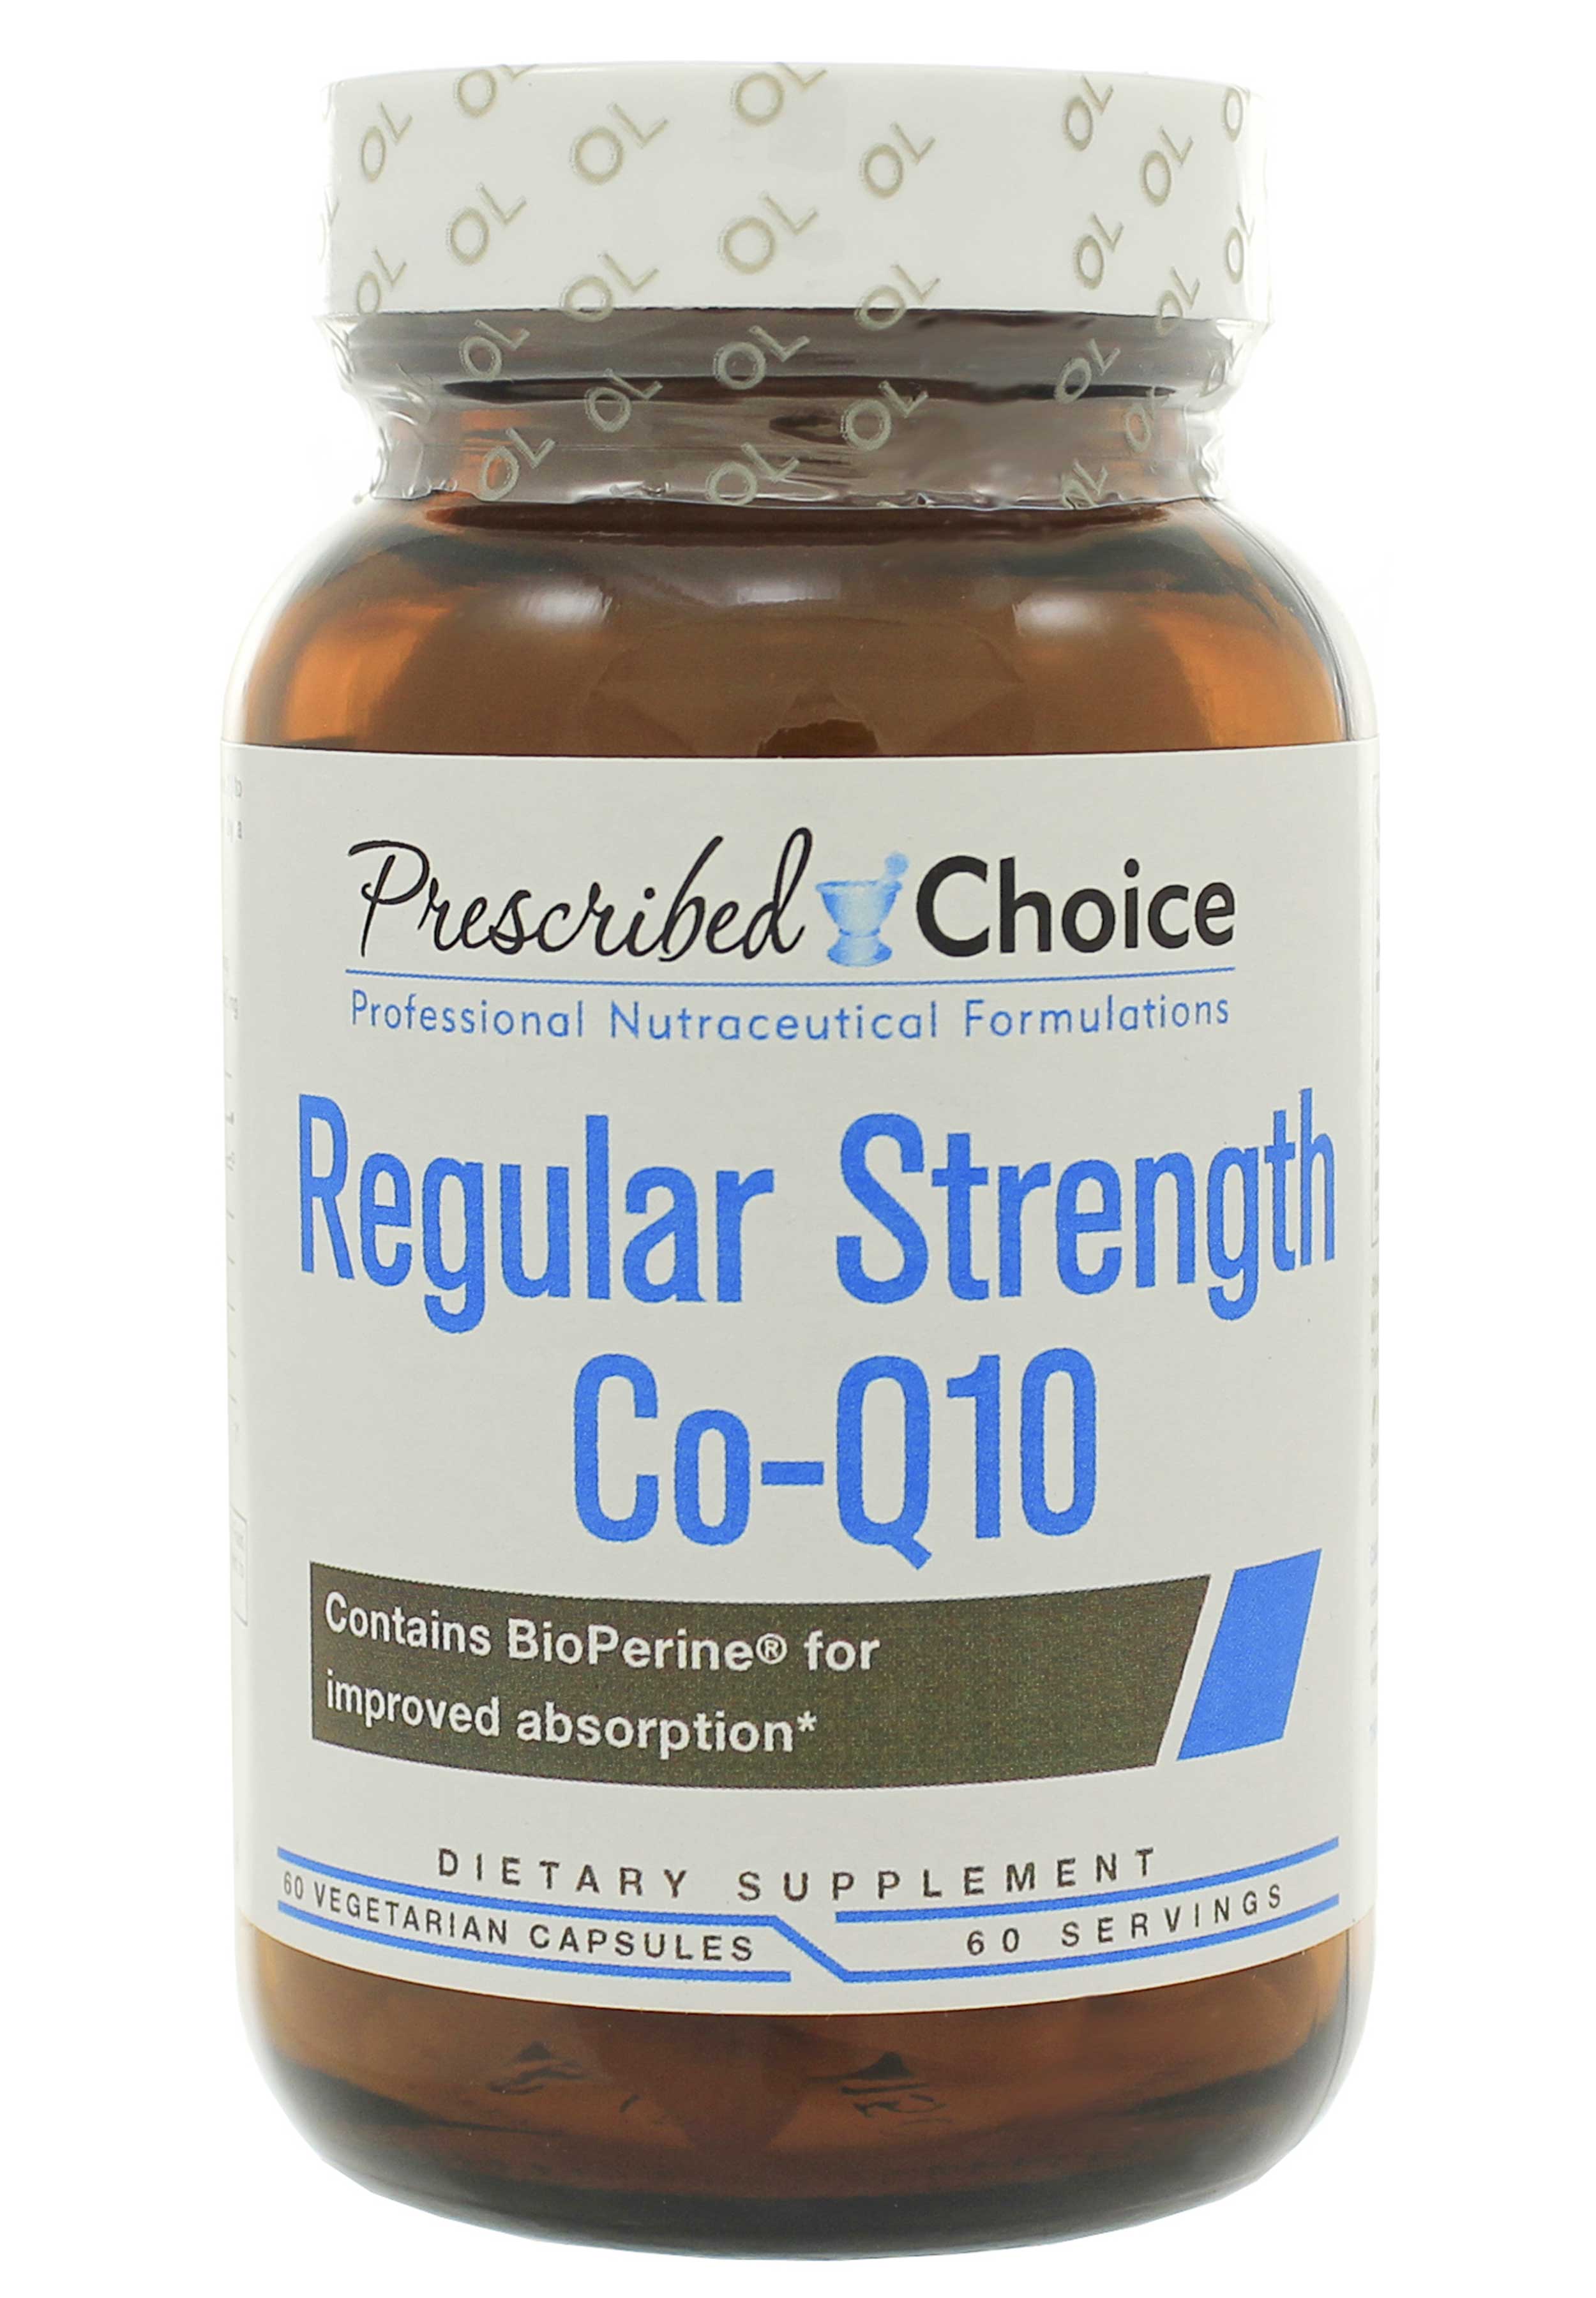 Prescribed Choice Regular Strength CoQ10 100 mg